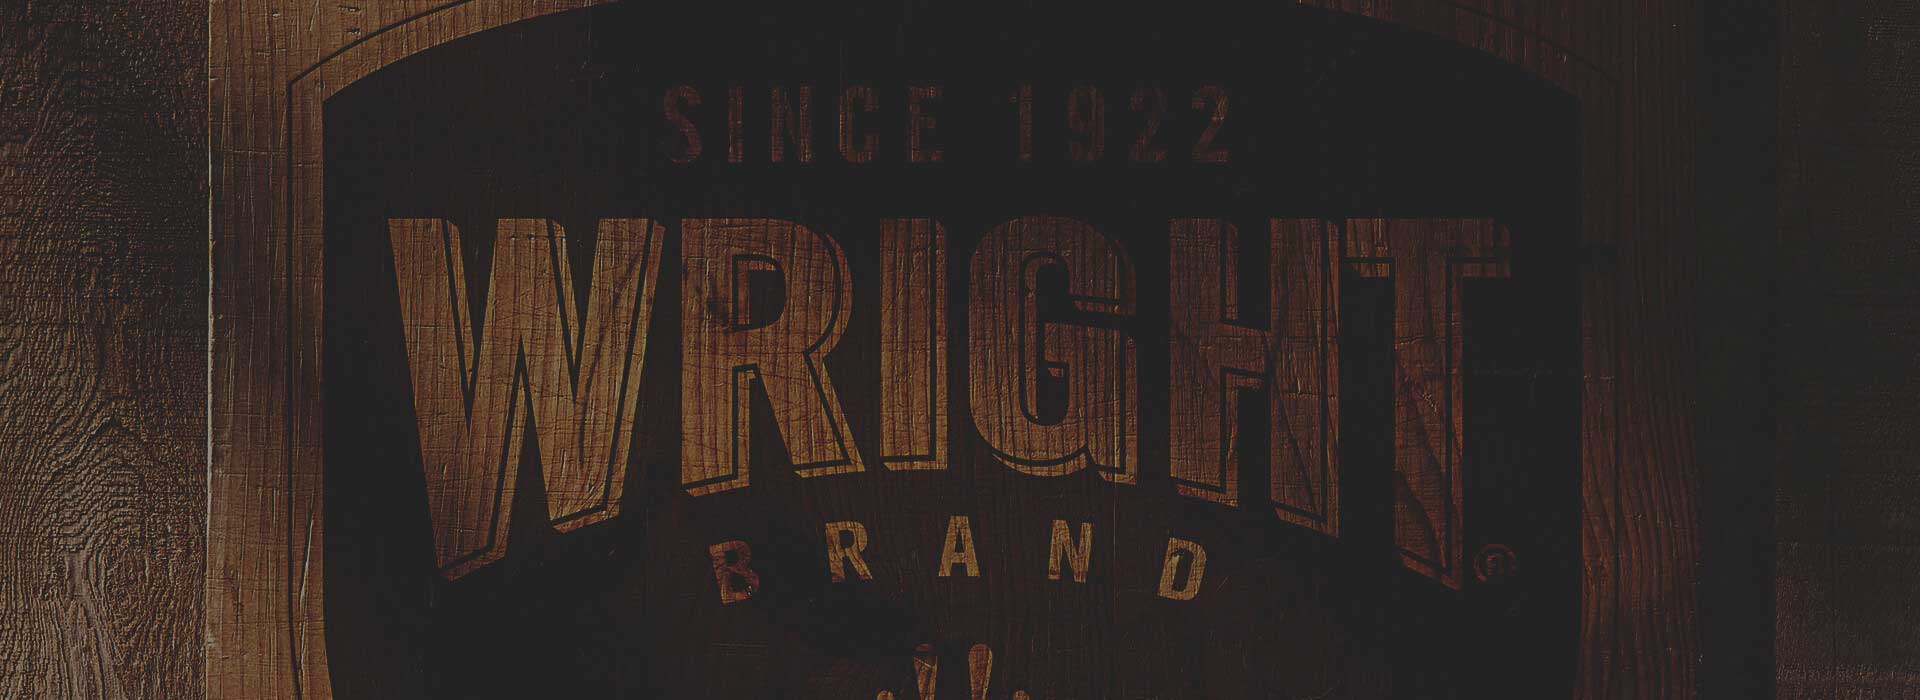 Wright Brand History